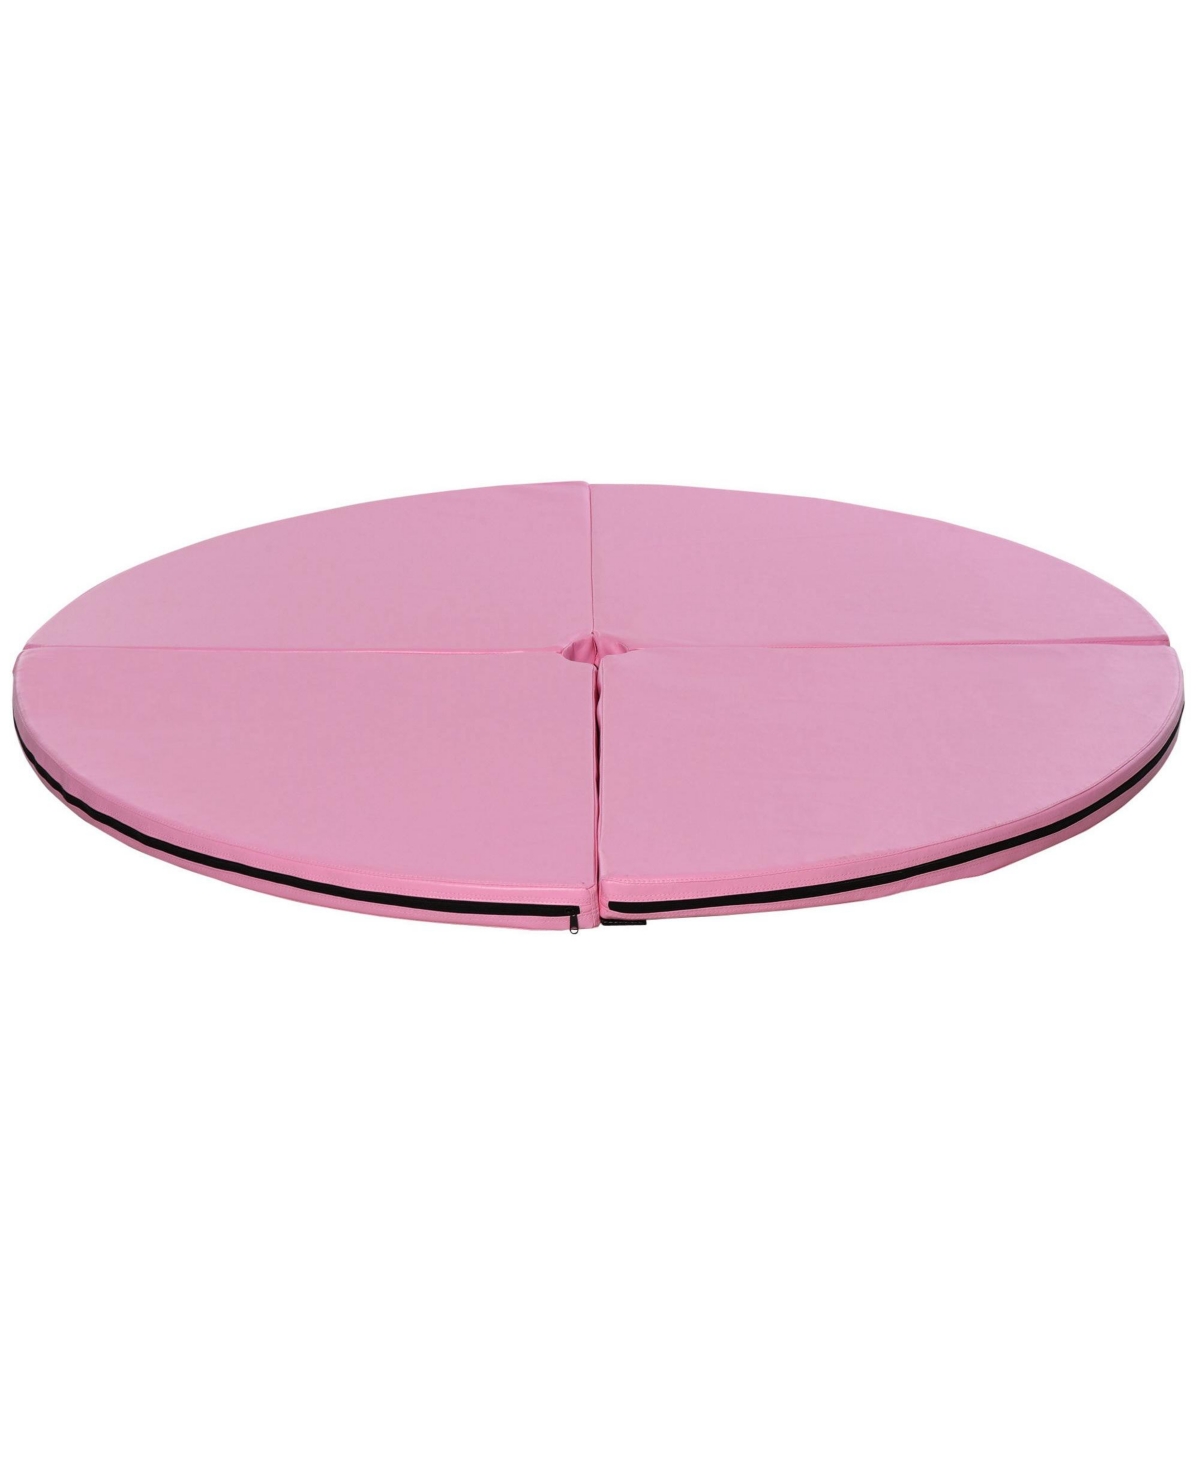 2"T x 5"W Foldable Dance Pole Crash Mat, Portable Round Pole Dance Mat, Lightweight and Foldable, Pink - Pink